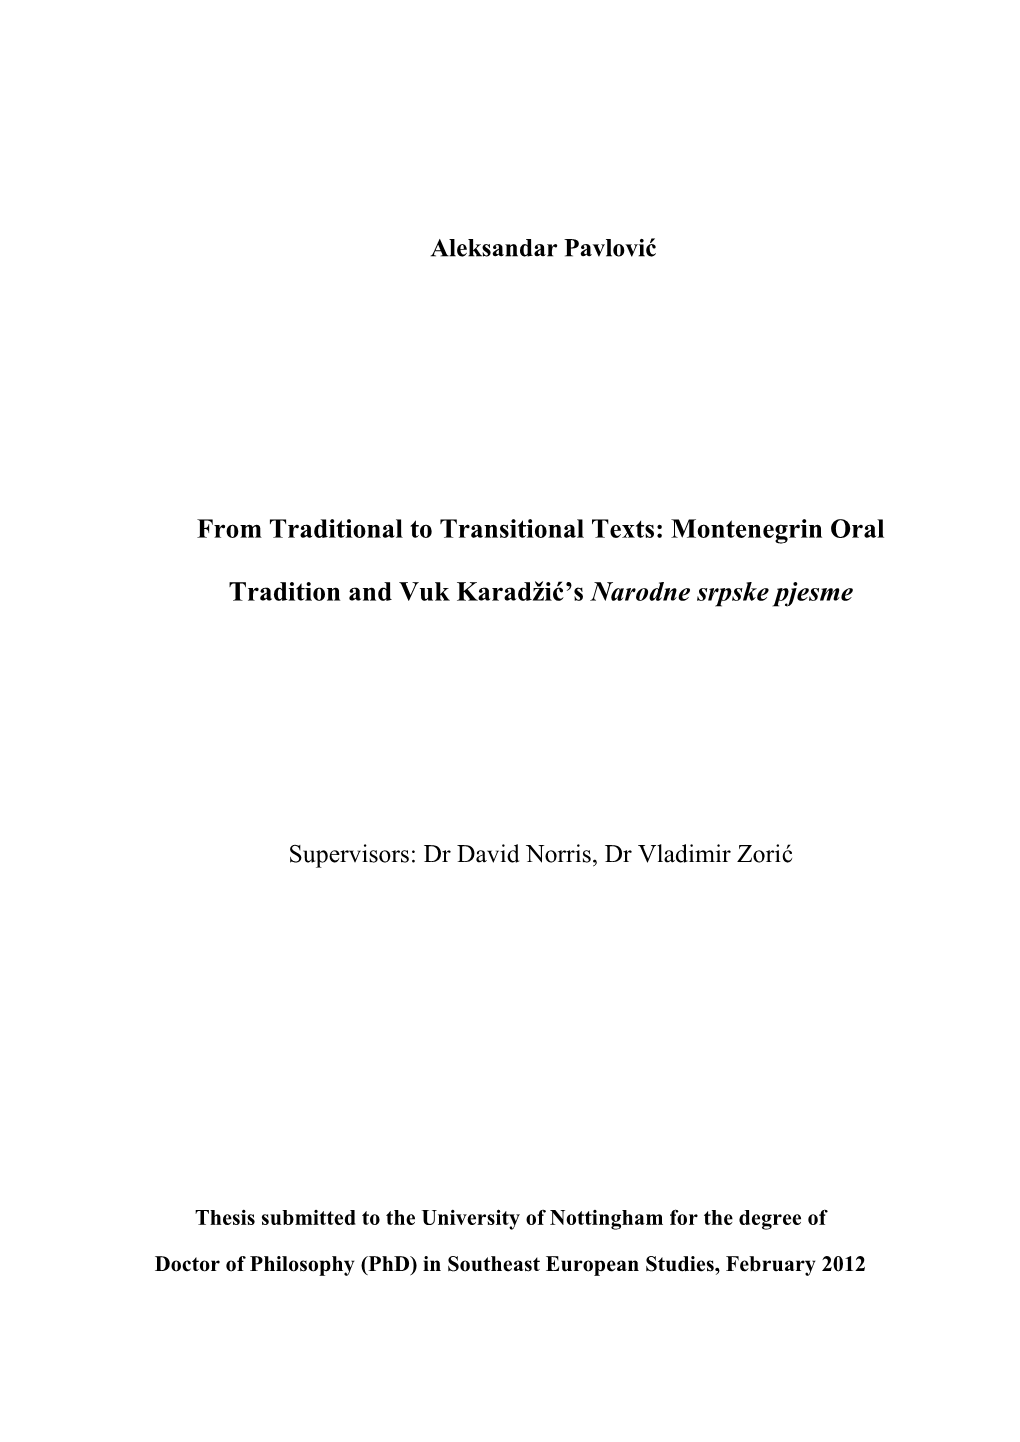 Pavlovic, Aleksandar (2012) from Traditional to Transitional Texts